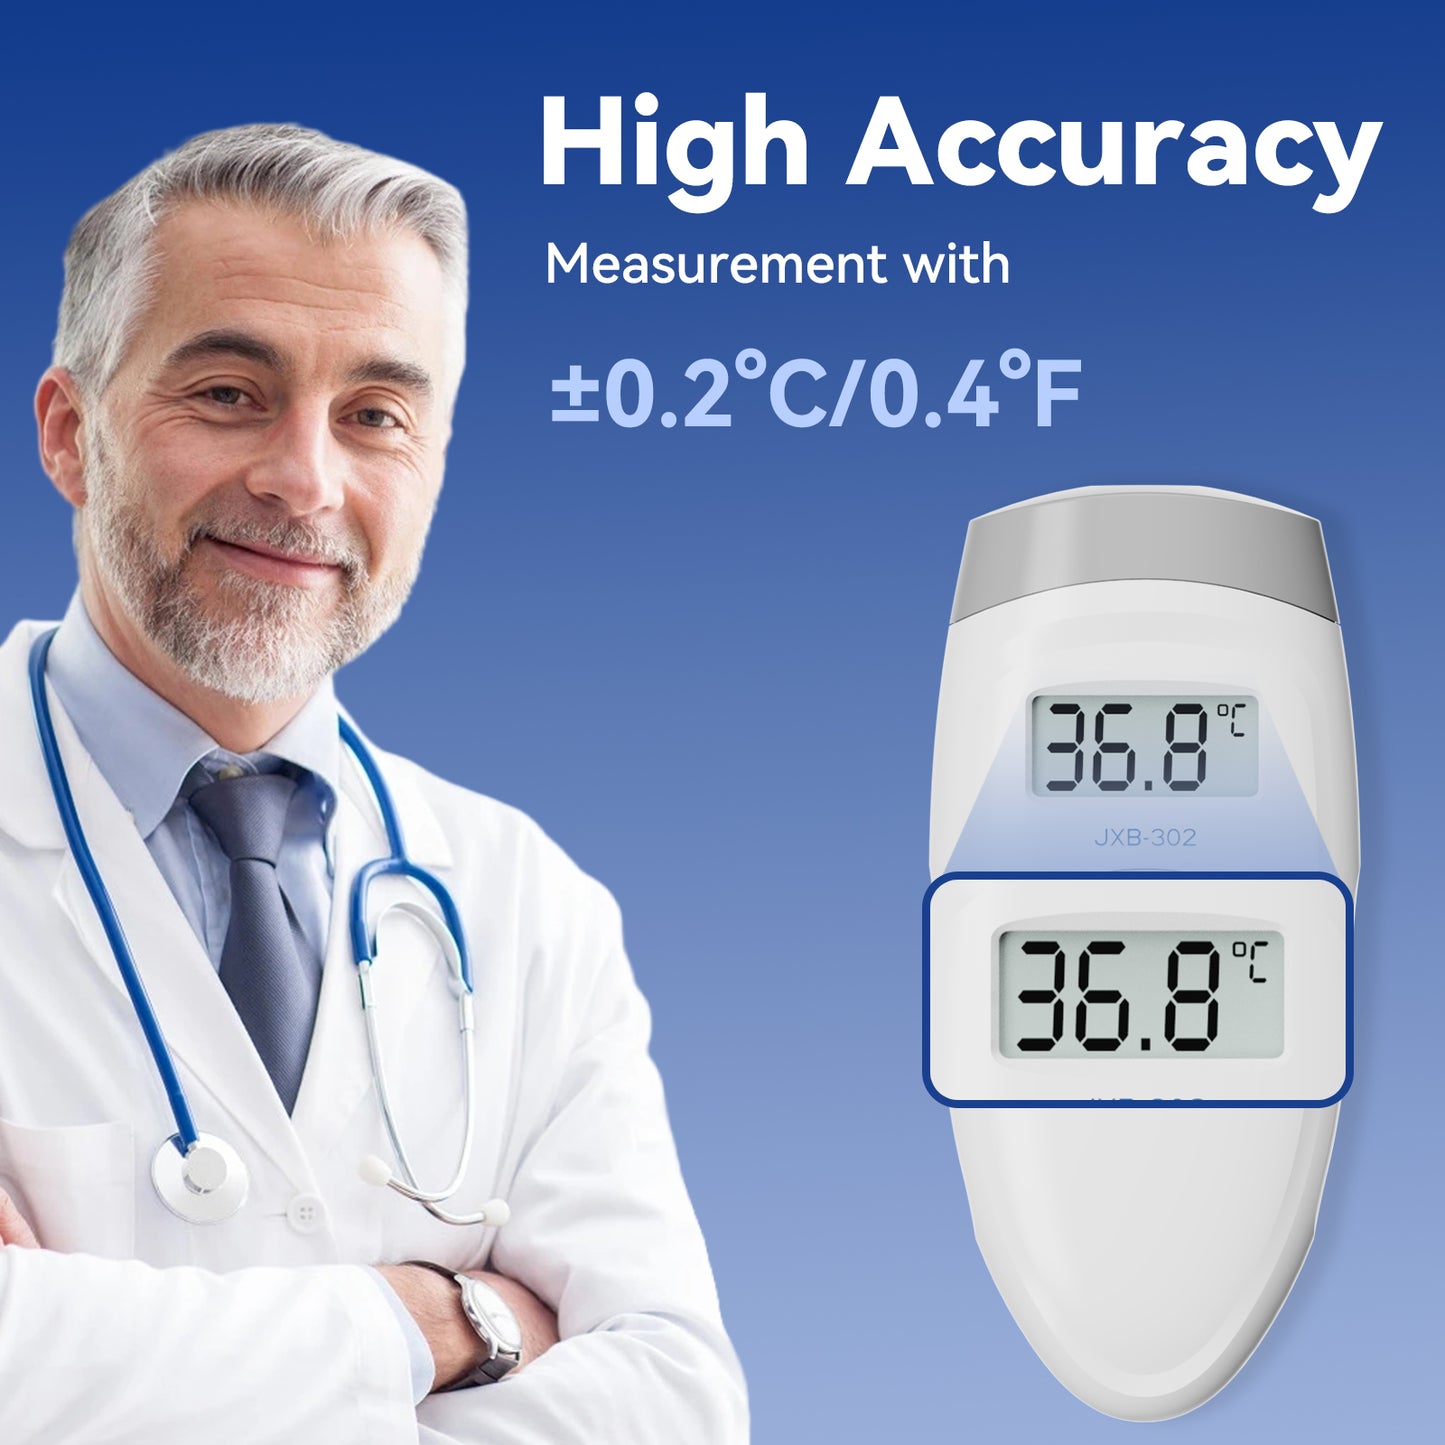 Berrcom Non Contact Infrared Forehead Thermometer Accuracy Digital Temperature JXB-302